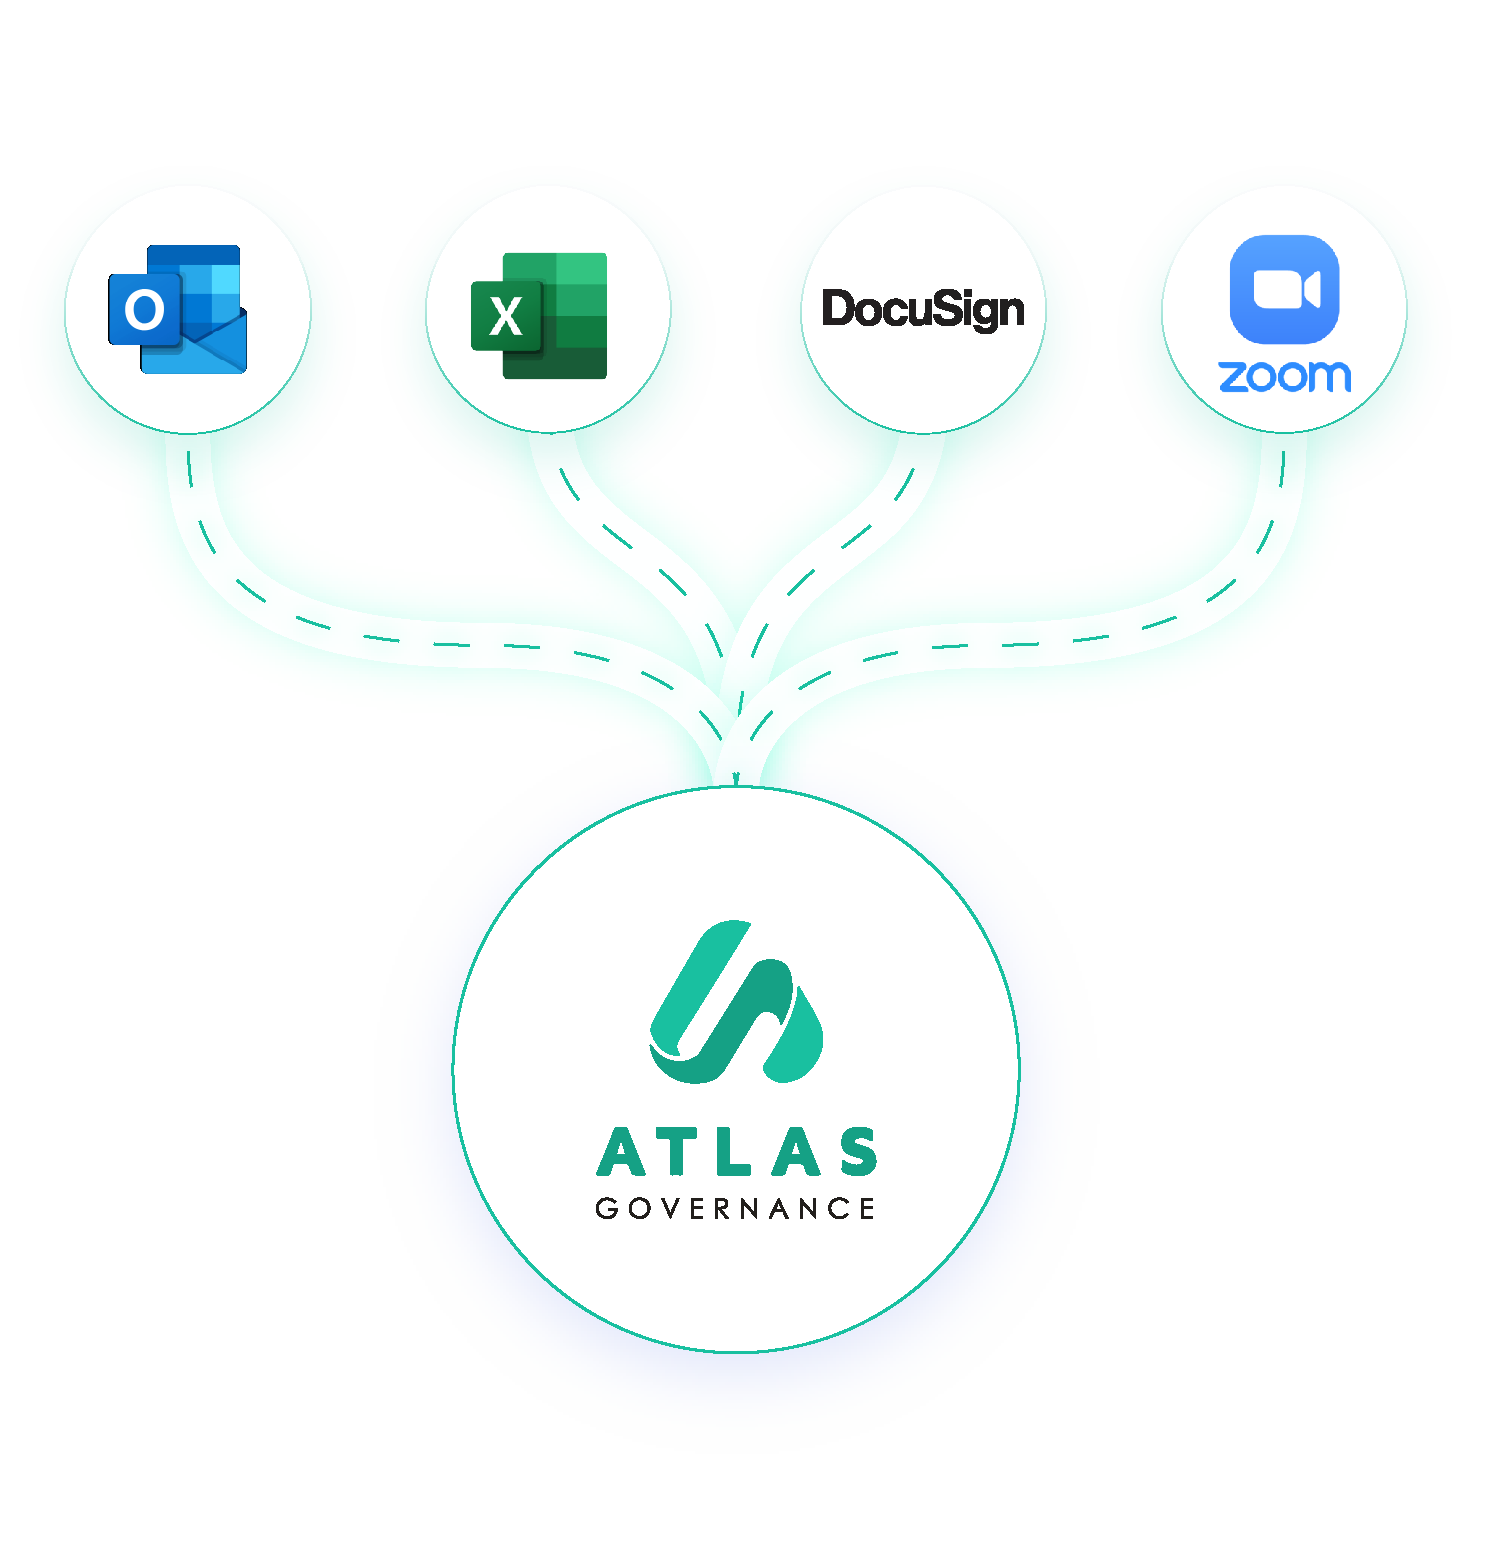 Latam_Atlas-All-in-One_3x